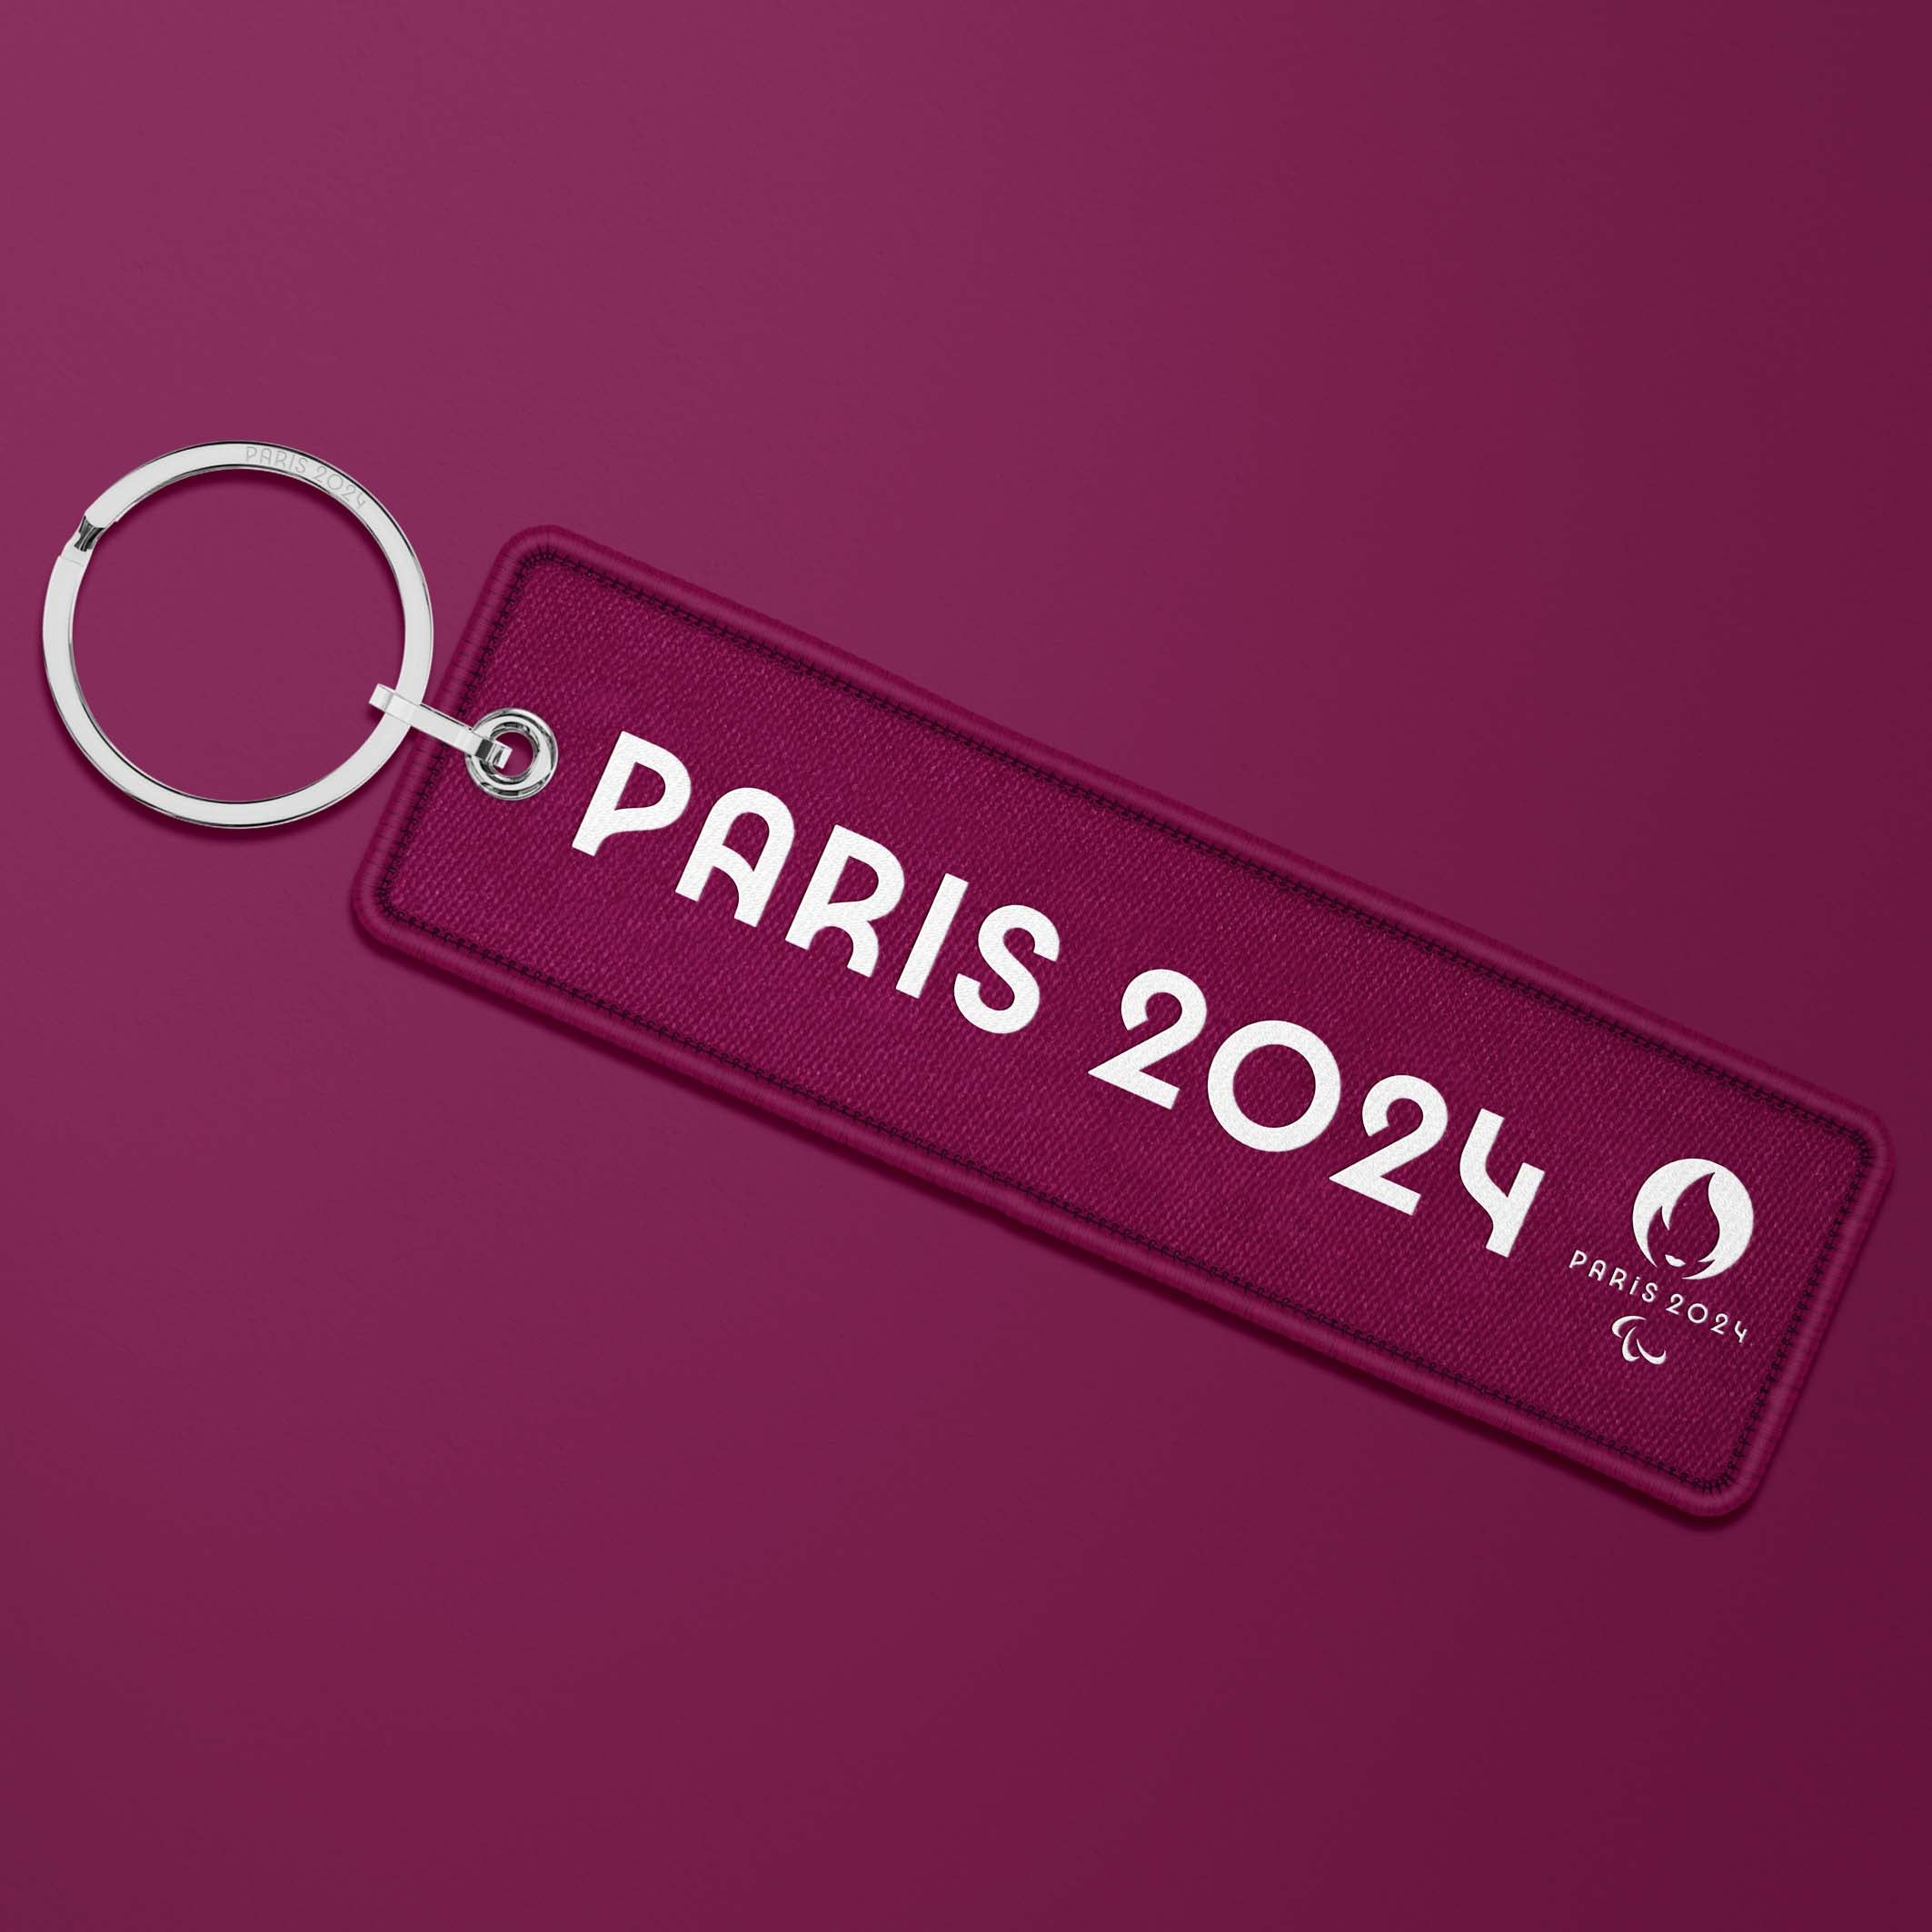 Paris 2024 Burgundy flame key ring - Sitting volleyball